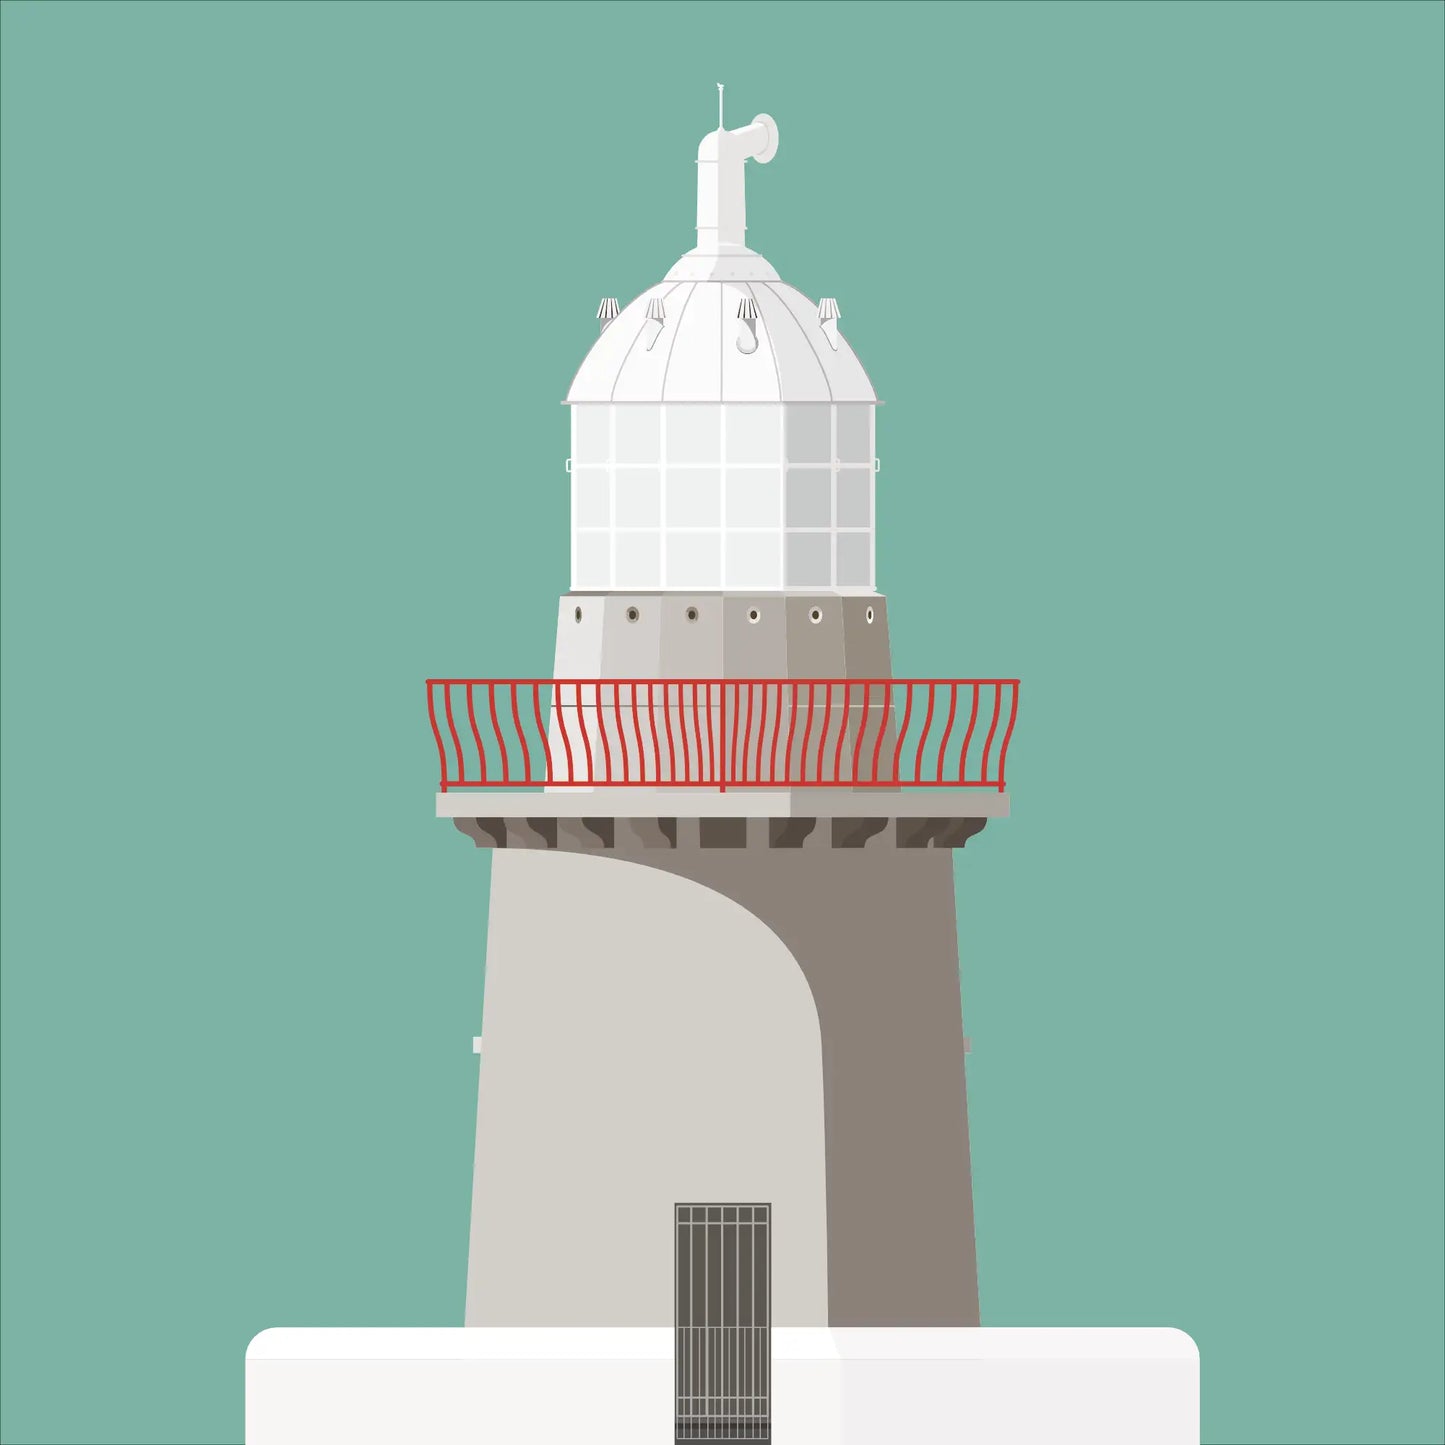 Illustration of Oyster Island lighthouse on a white background inside light blue square.